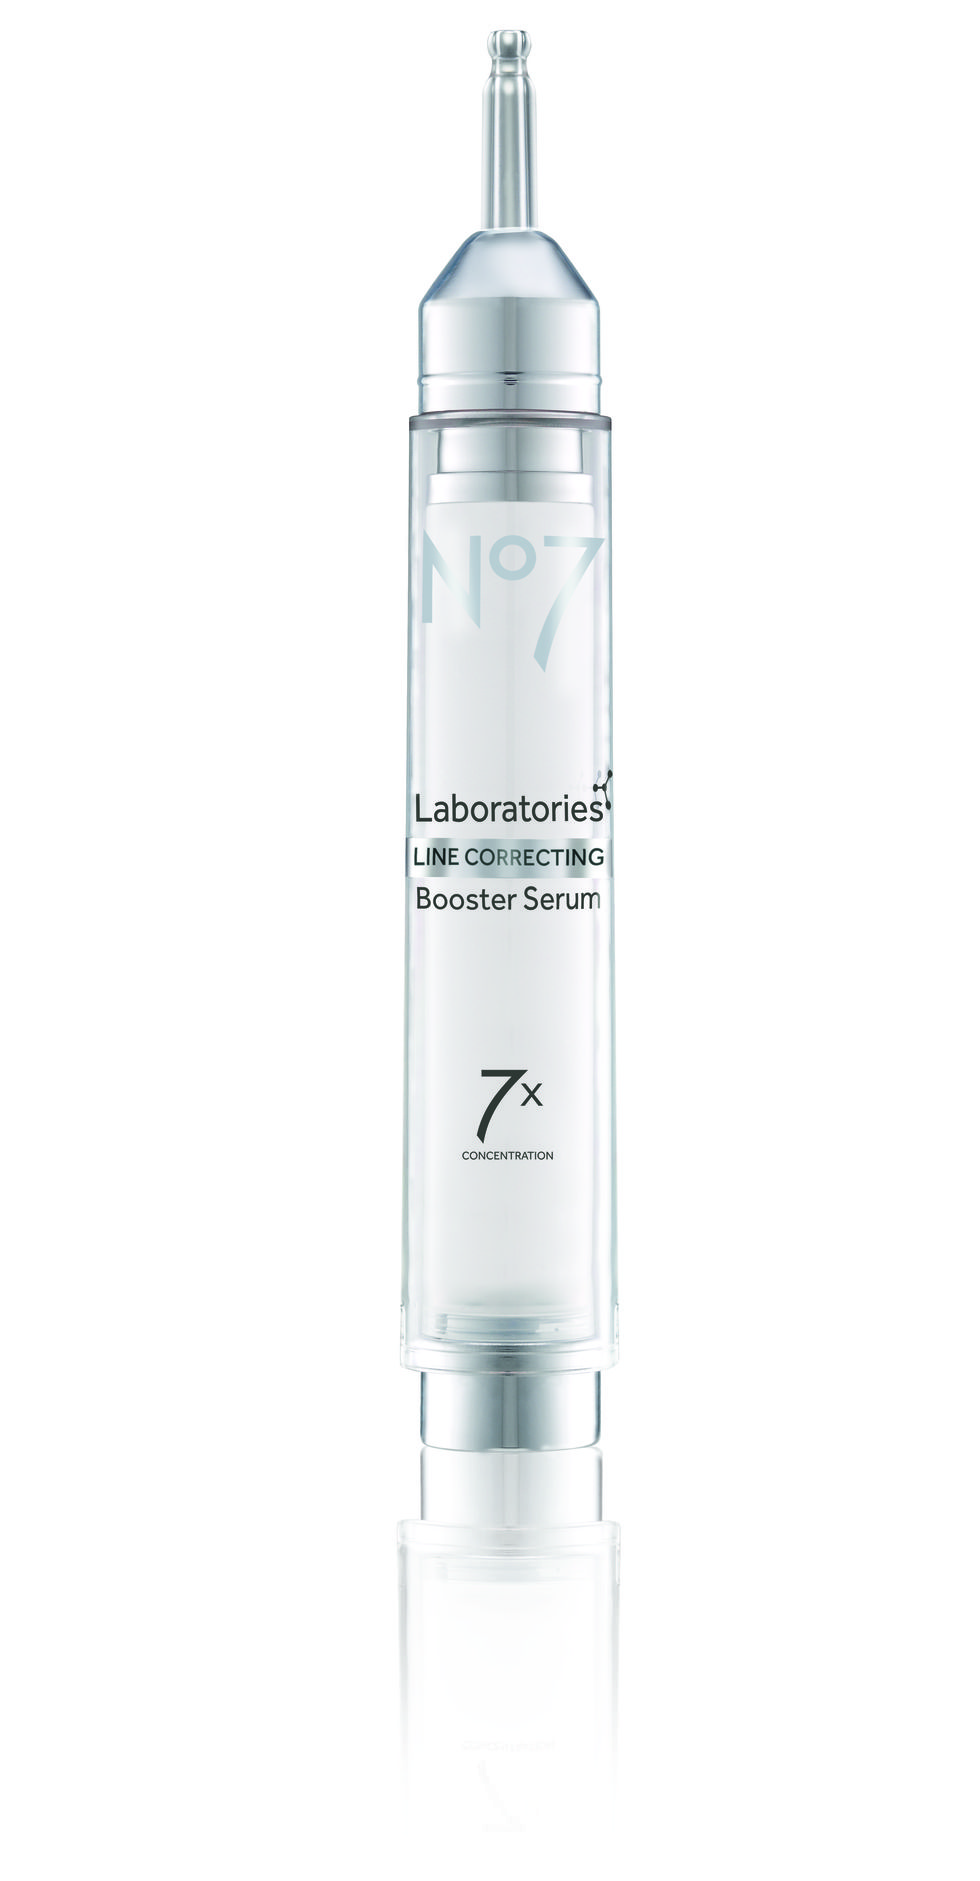 No7 Laboratories LINE CORRECTING Booster Serum